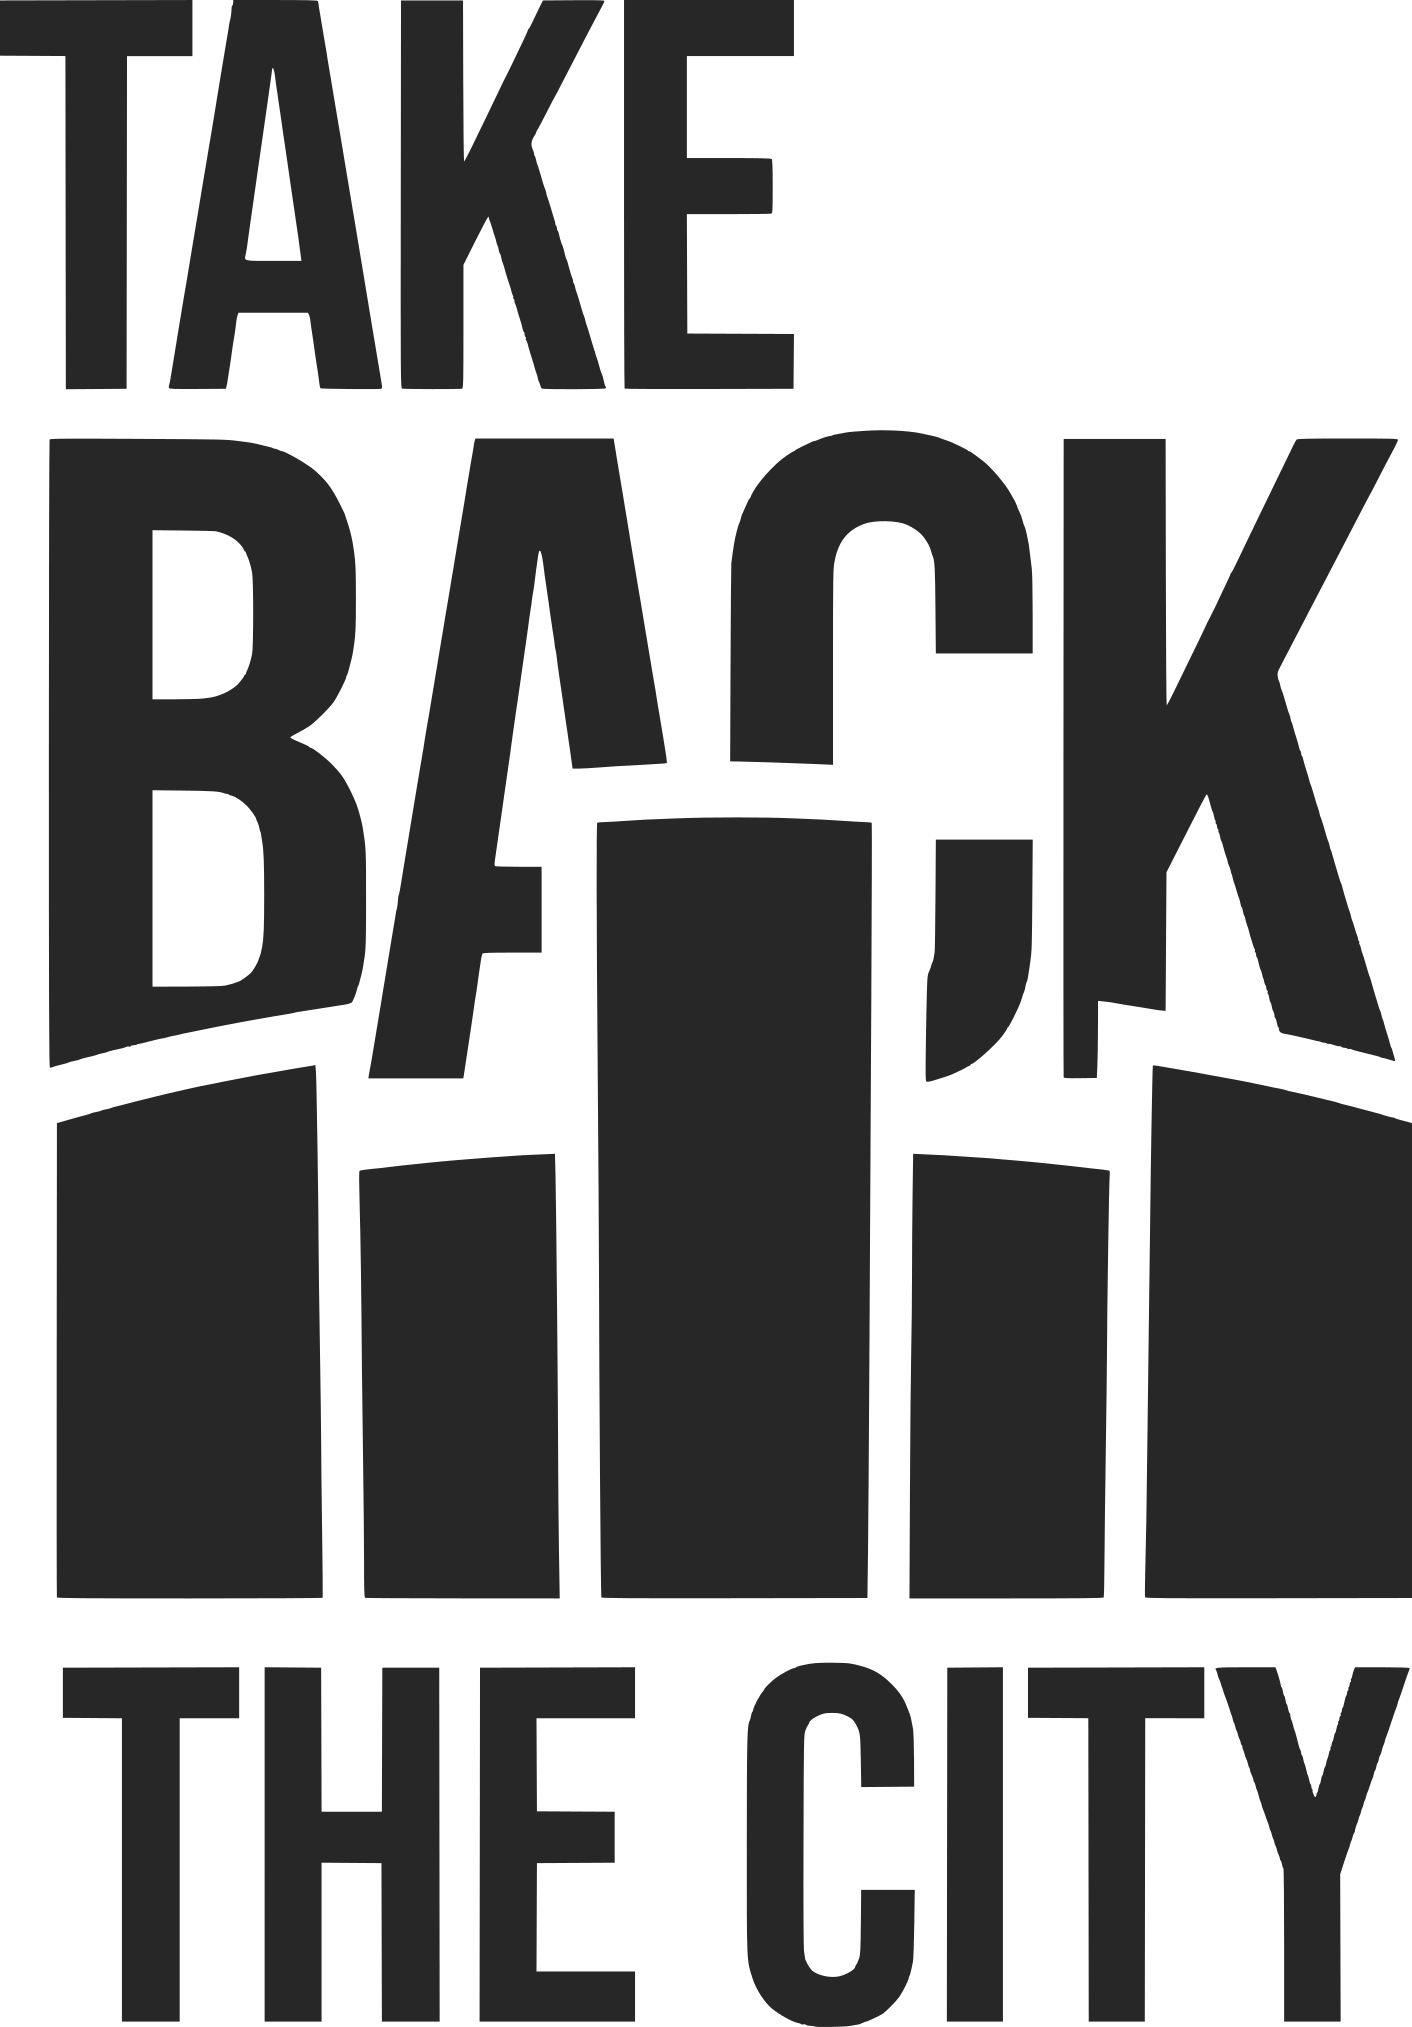 Take Back the City logo